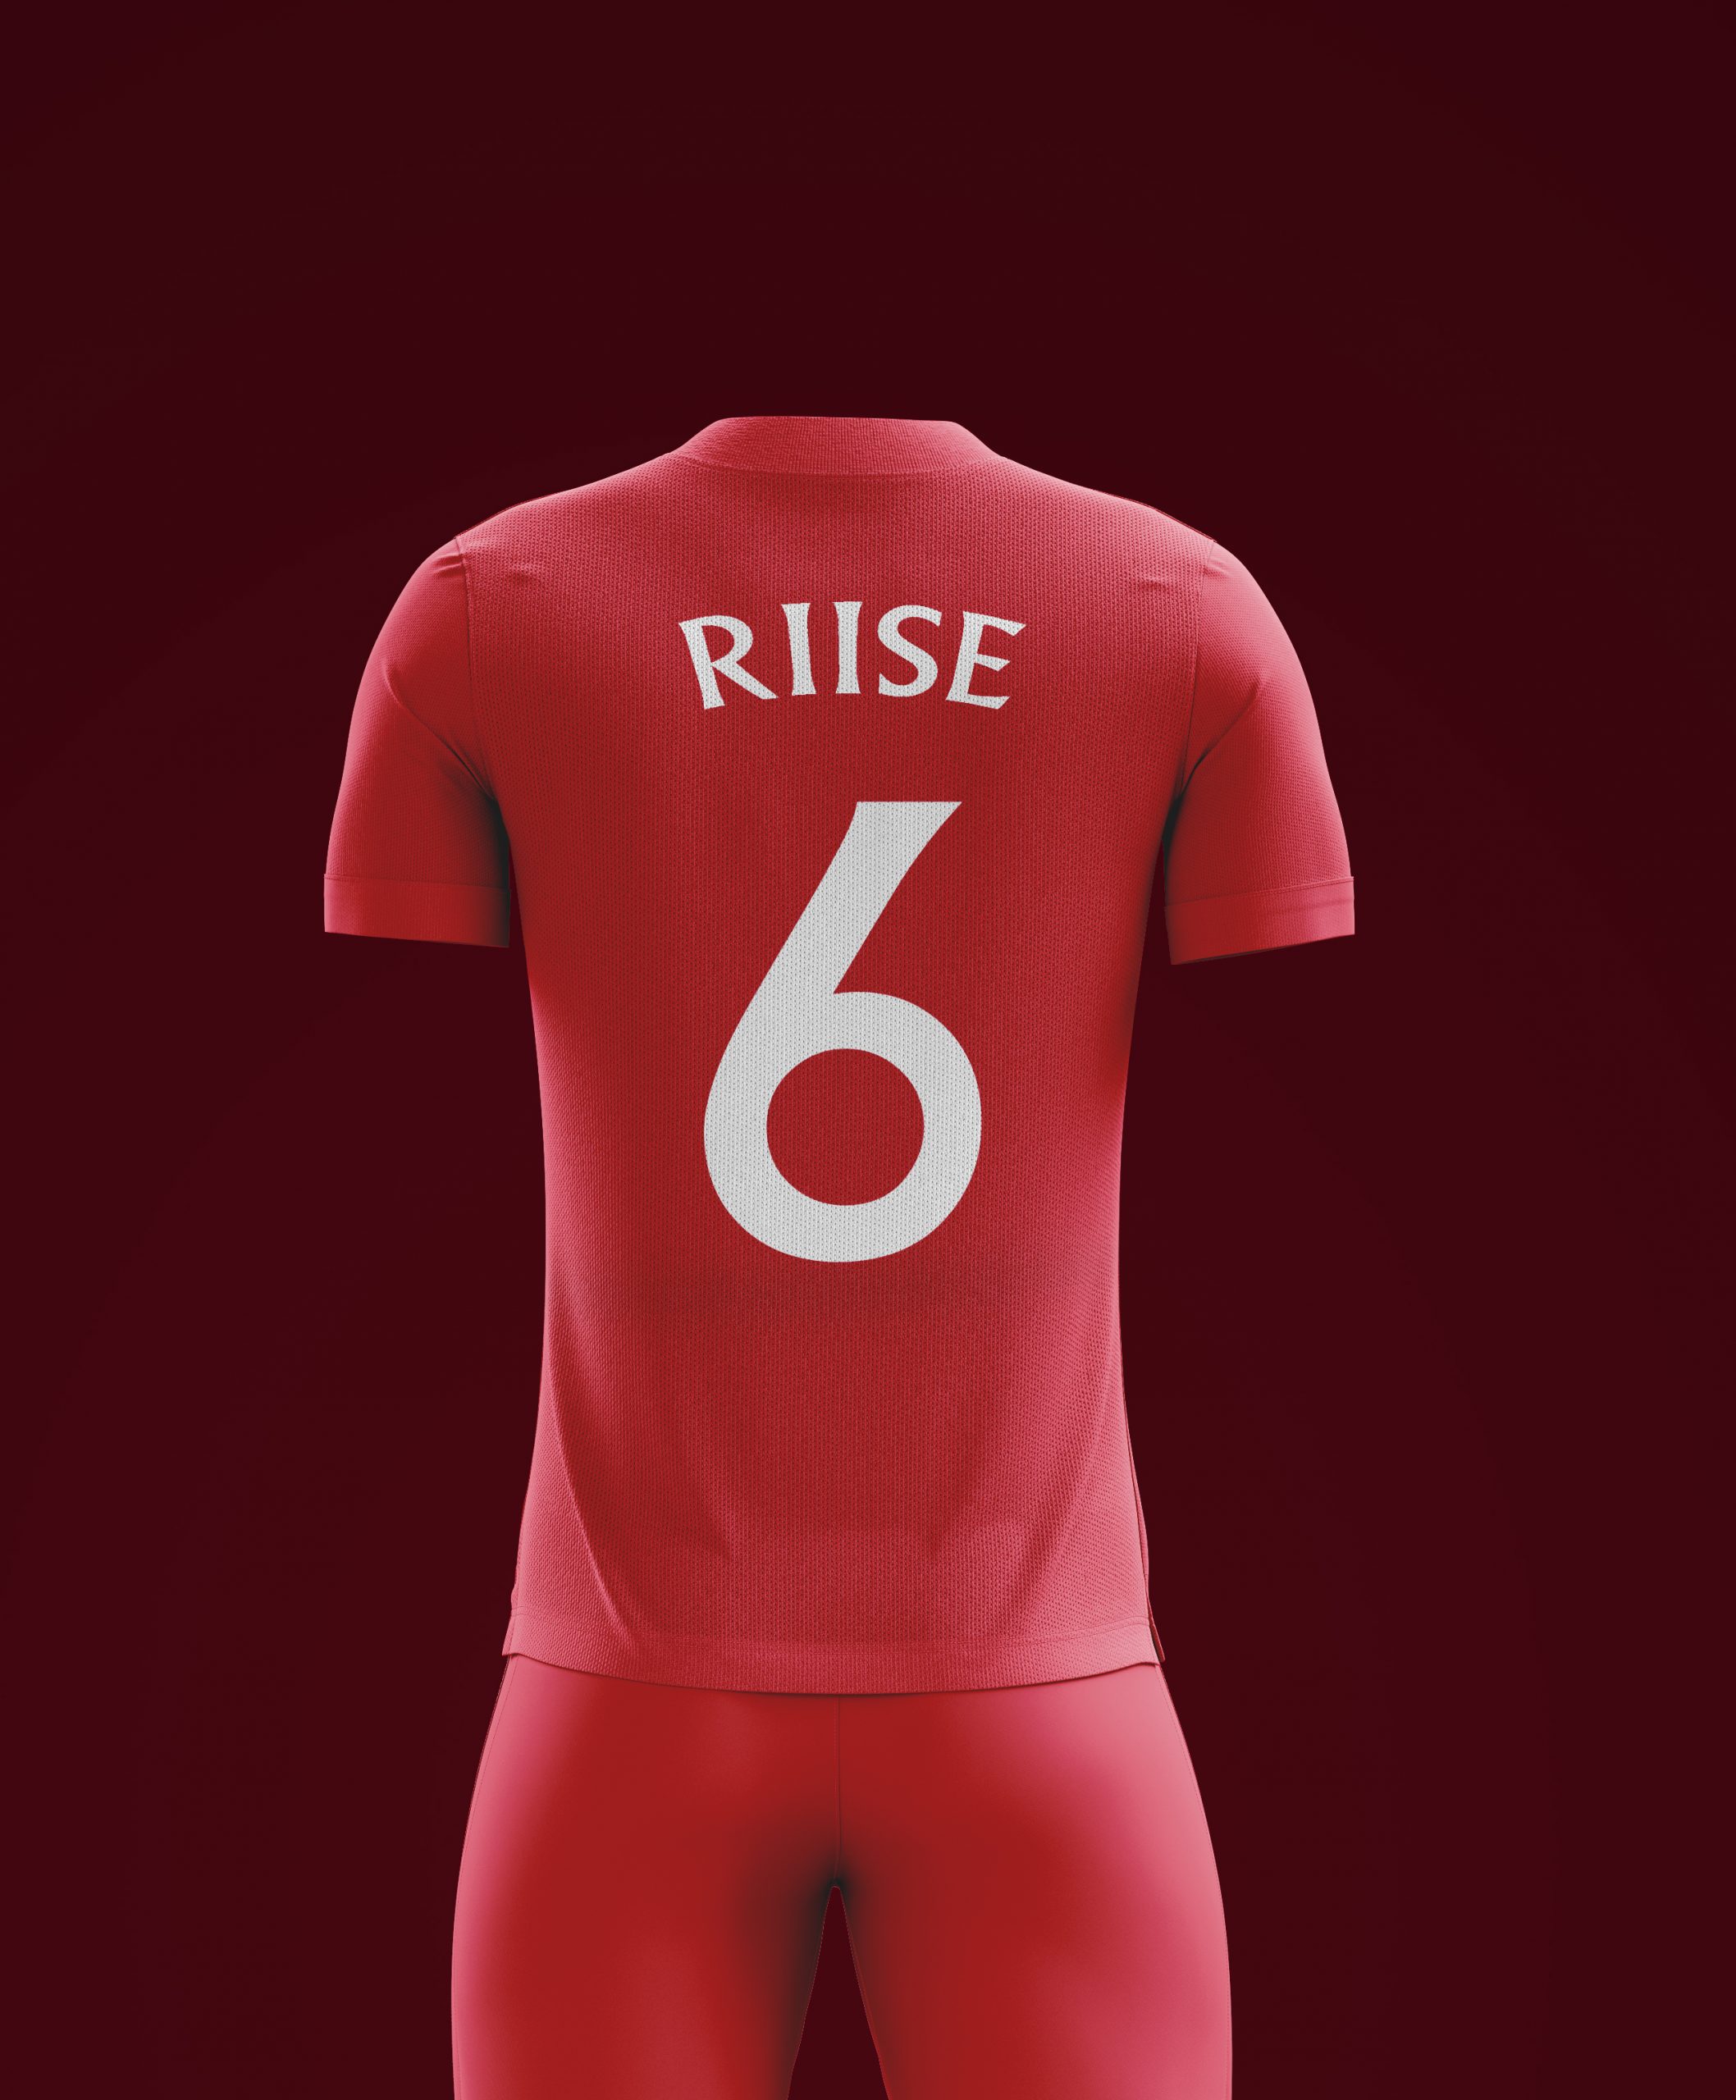 John Arne Riise: En Liverpool FC-legend från Norge!